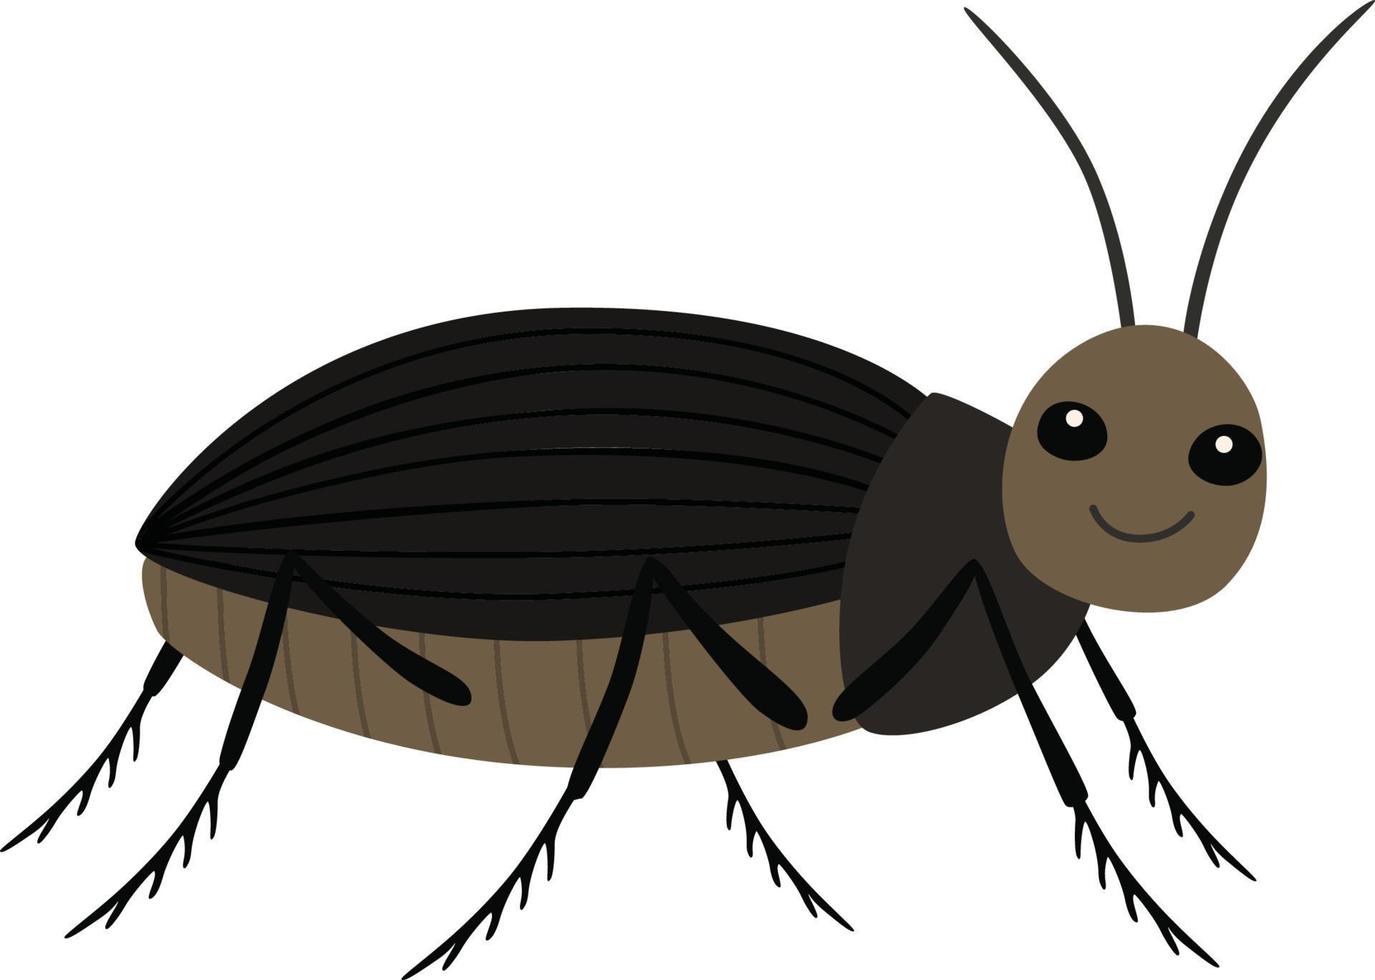 Black beetle illustration vector